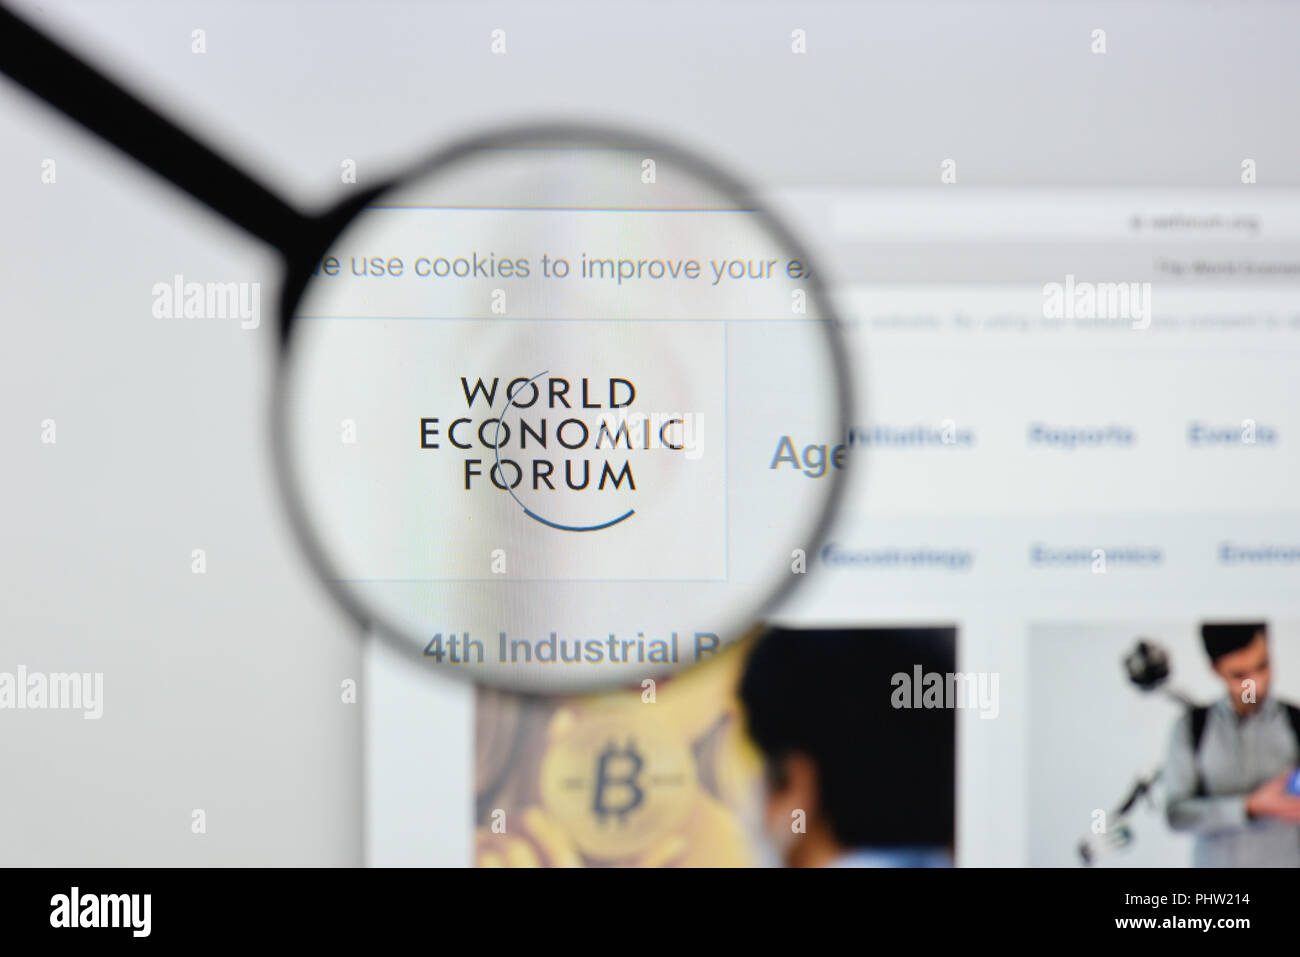 Milan, Italy - August 20, 2018: world economic forum website homepage. world economic forum logo visible. Stock Photo